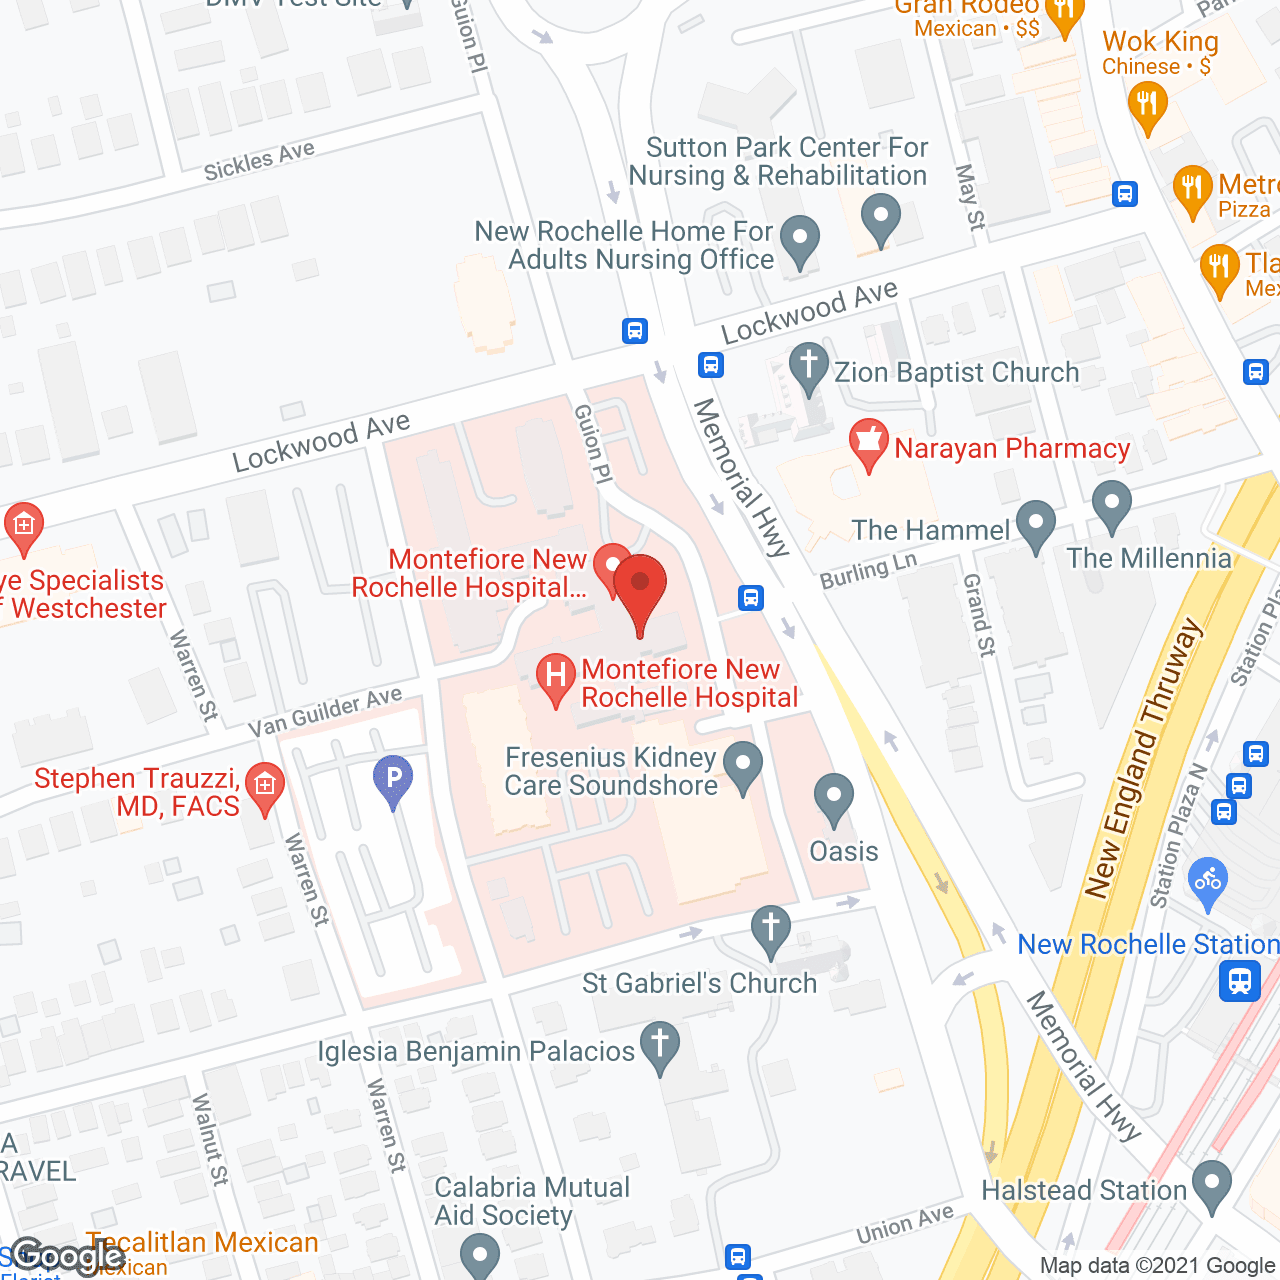 Howe Avenue Nursing Home in google map